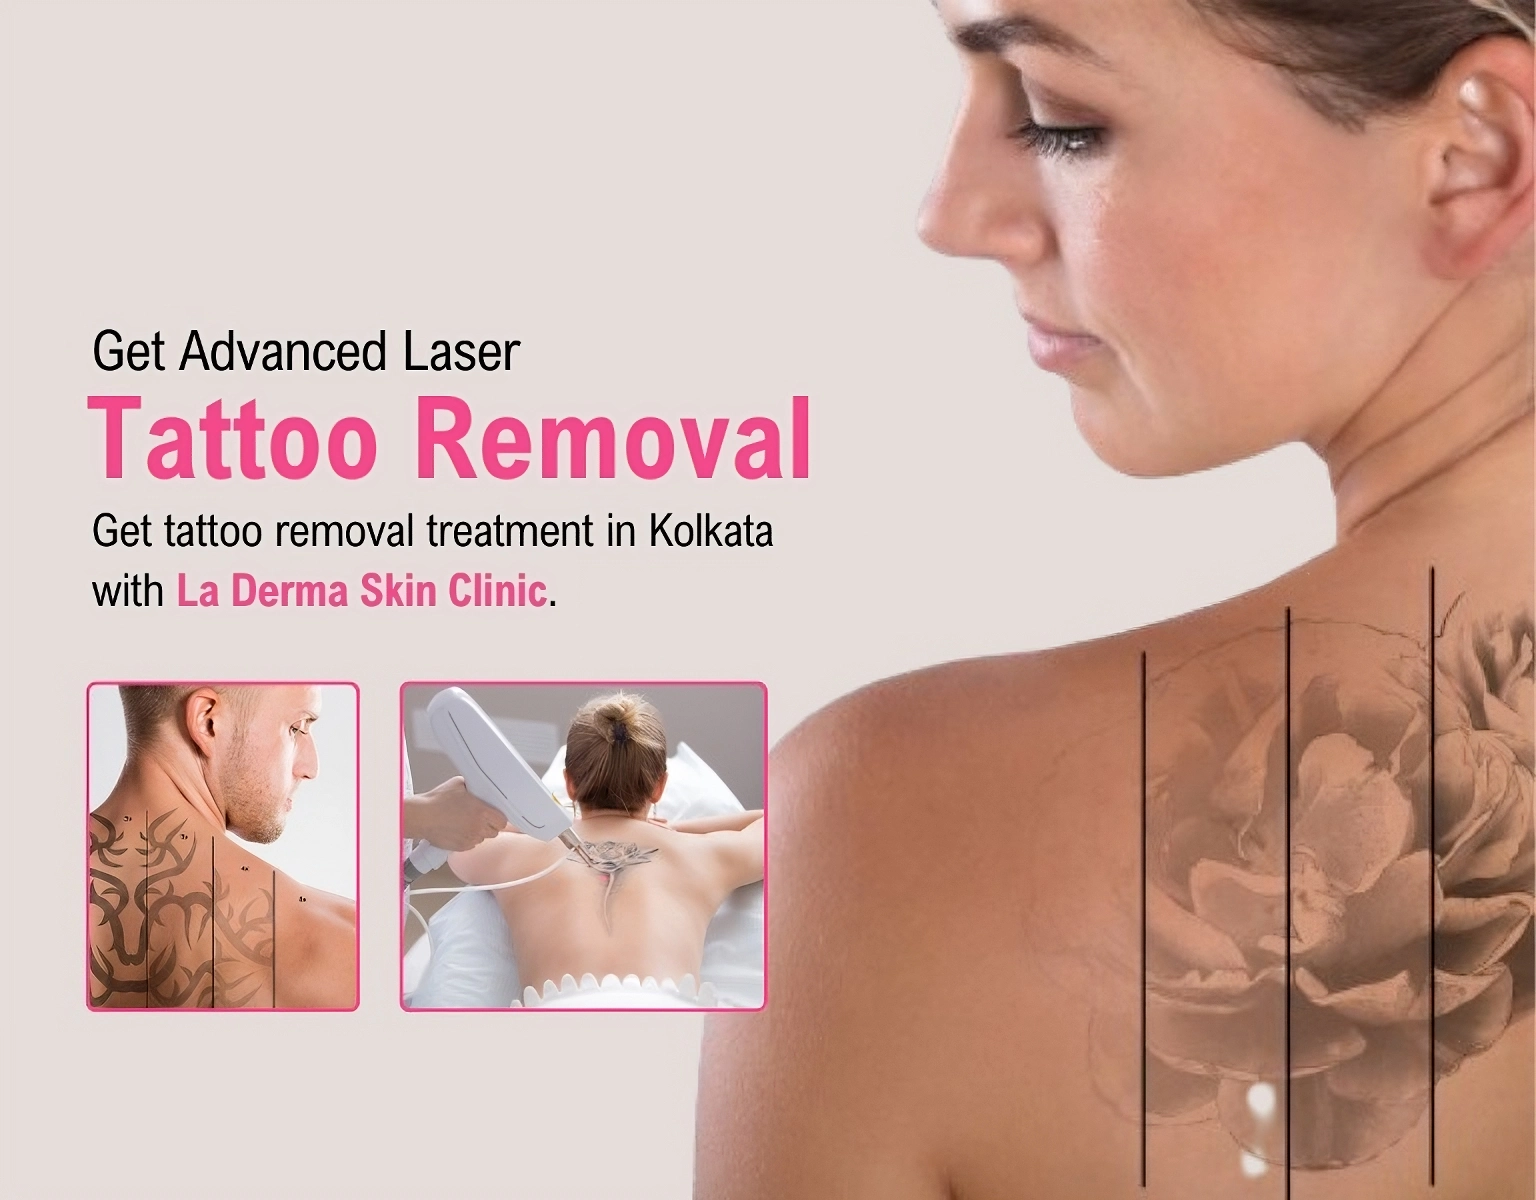 Tattoo Removal Treatment Near You in Kolkata